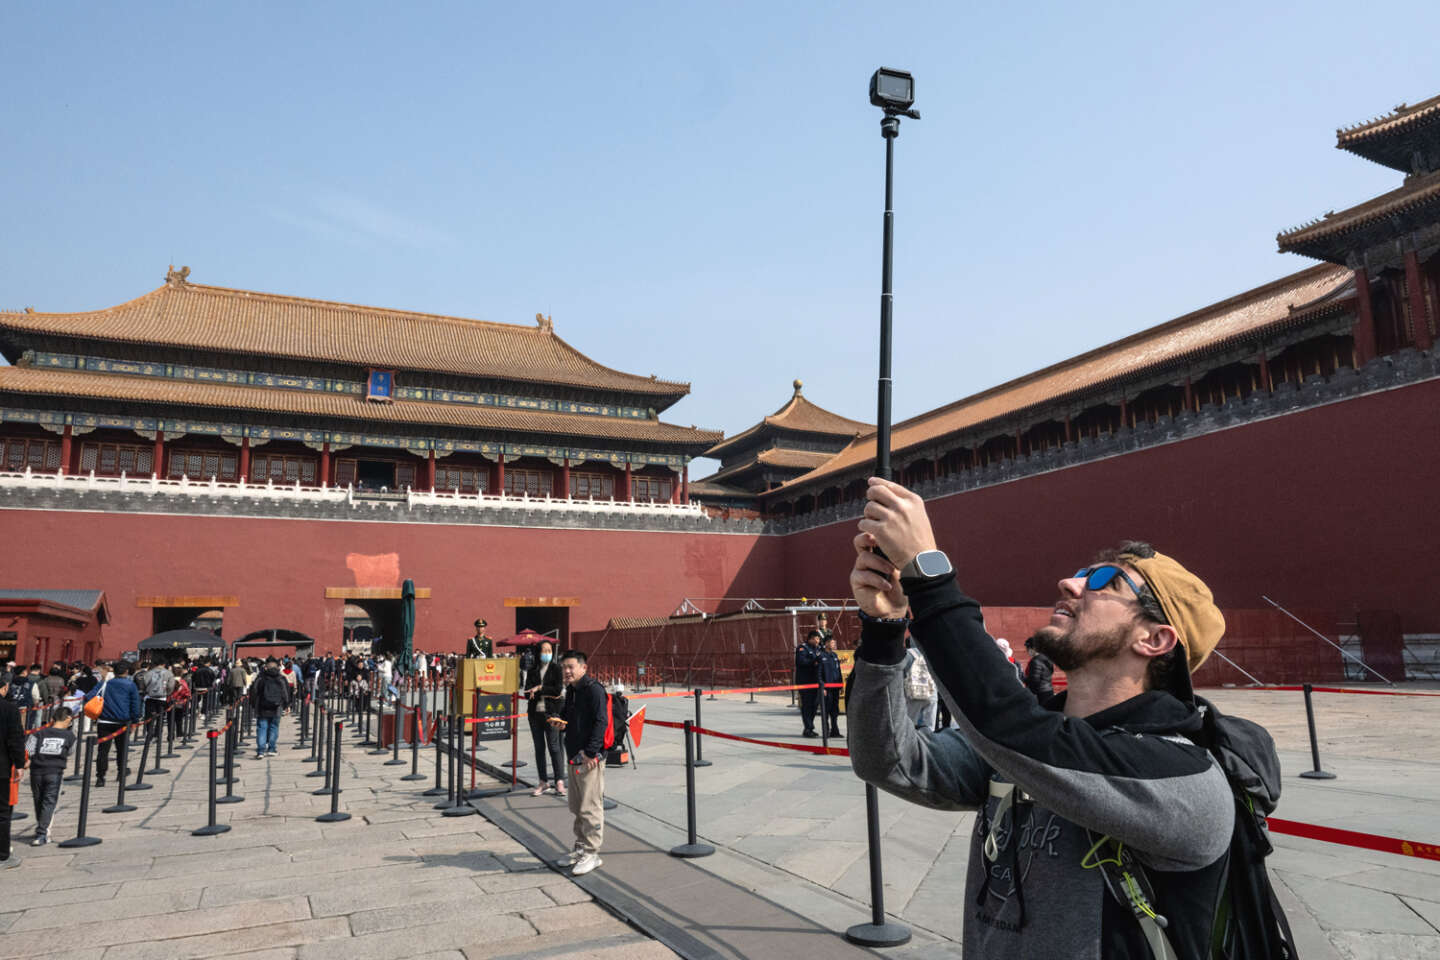 After zero-Covid, China fears zero-tourism